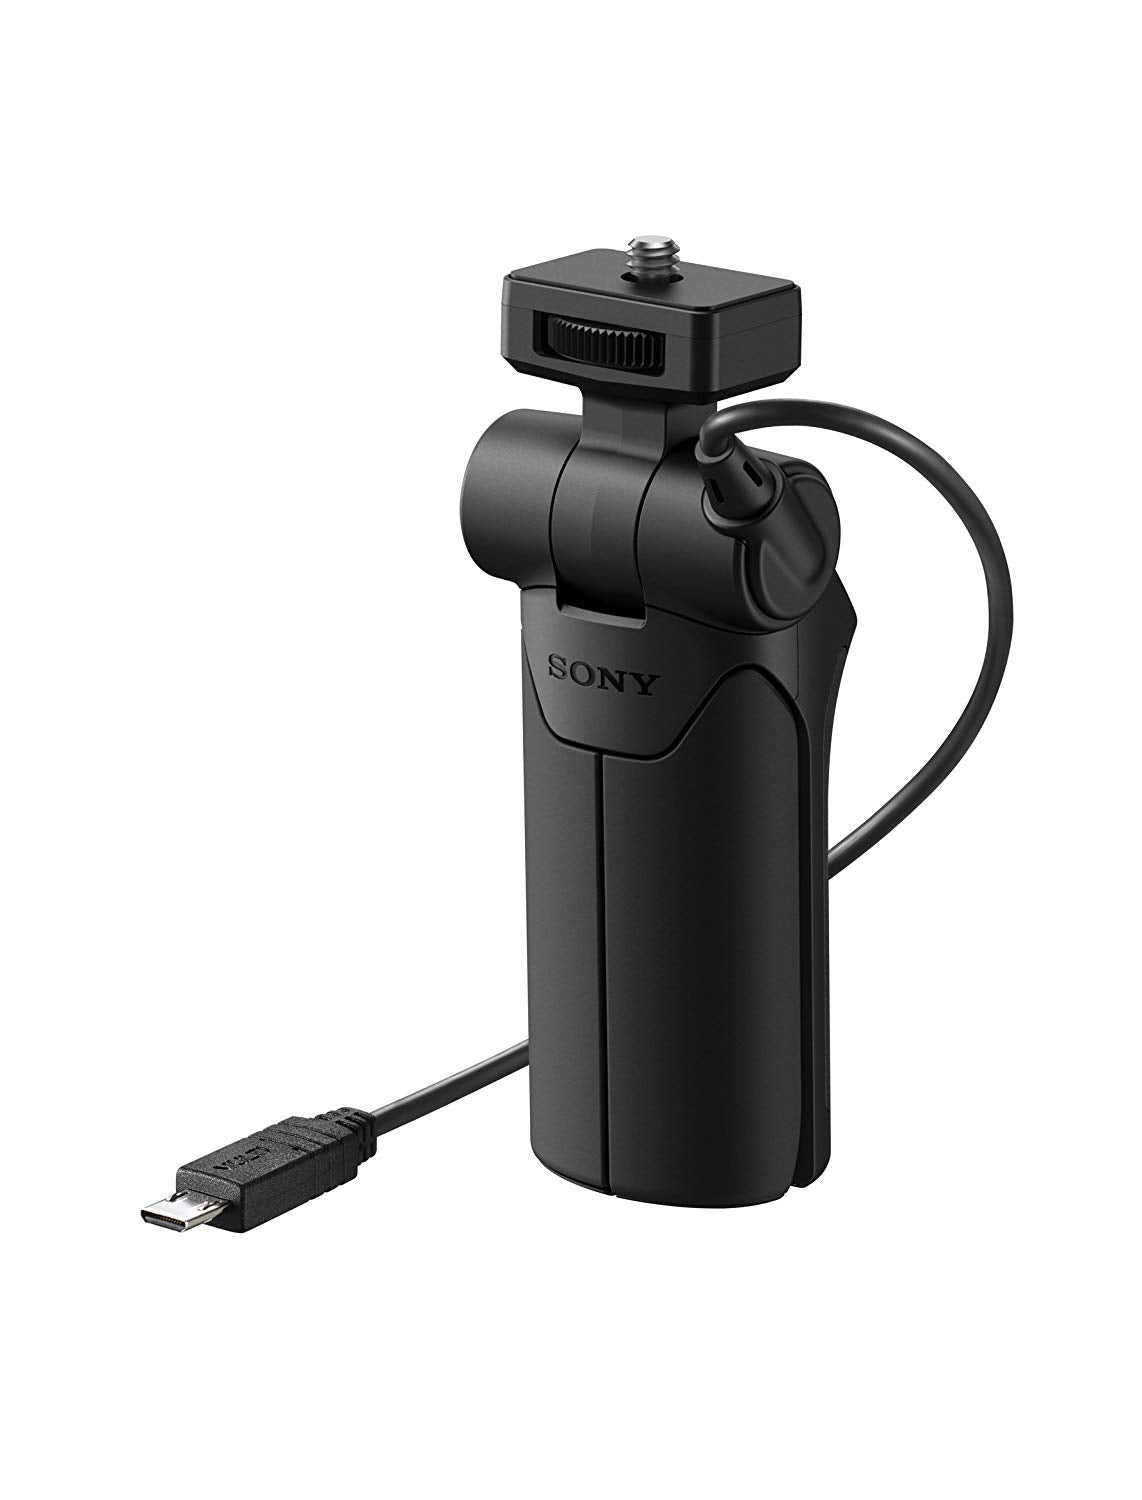 Sony Vct Camera Grip, for Vlogging - Black (VCTSGR1)